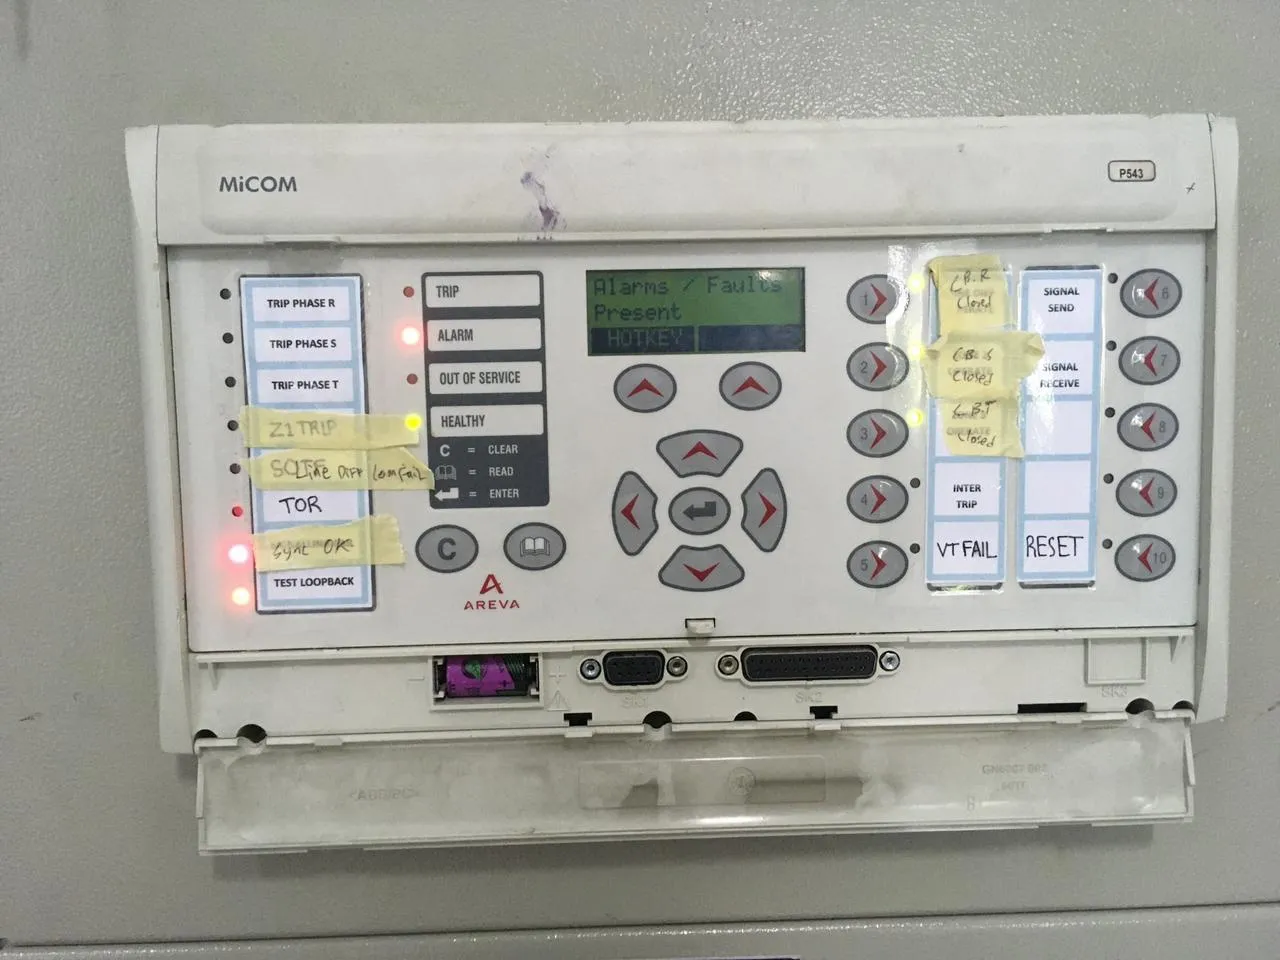 SICAM PAS connection to Micom P543 IEC-61850 Case Failed to Connect